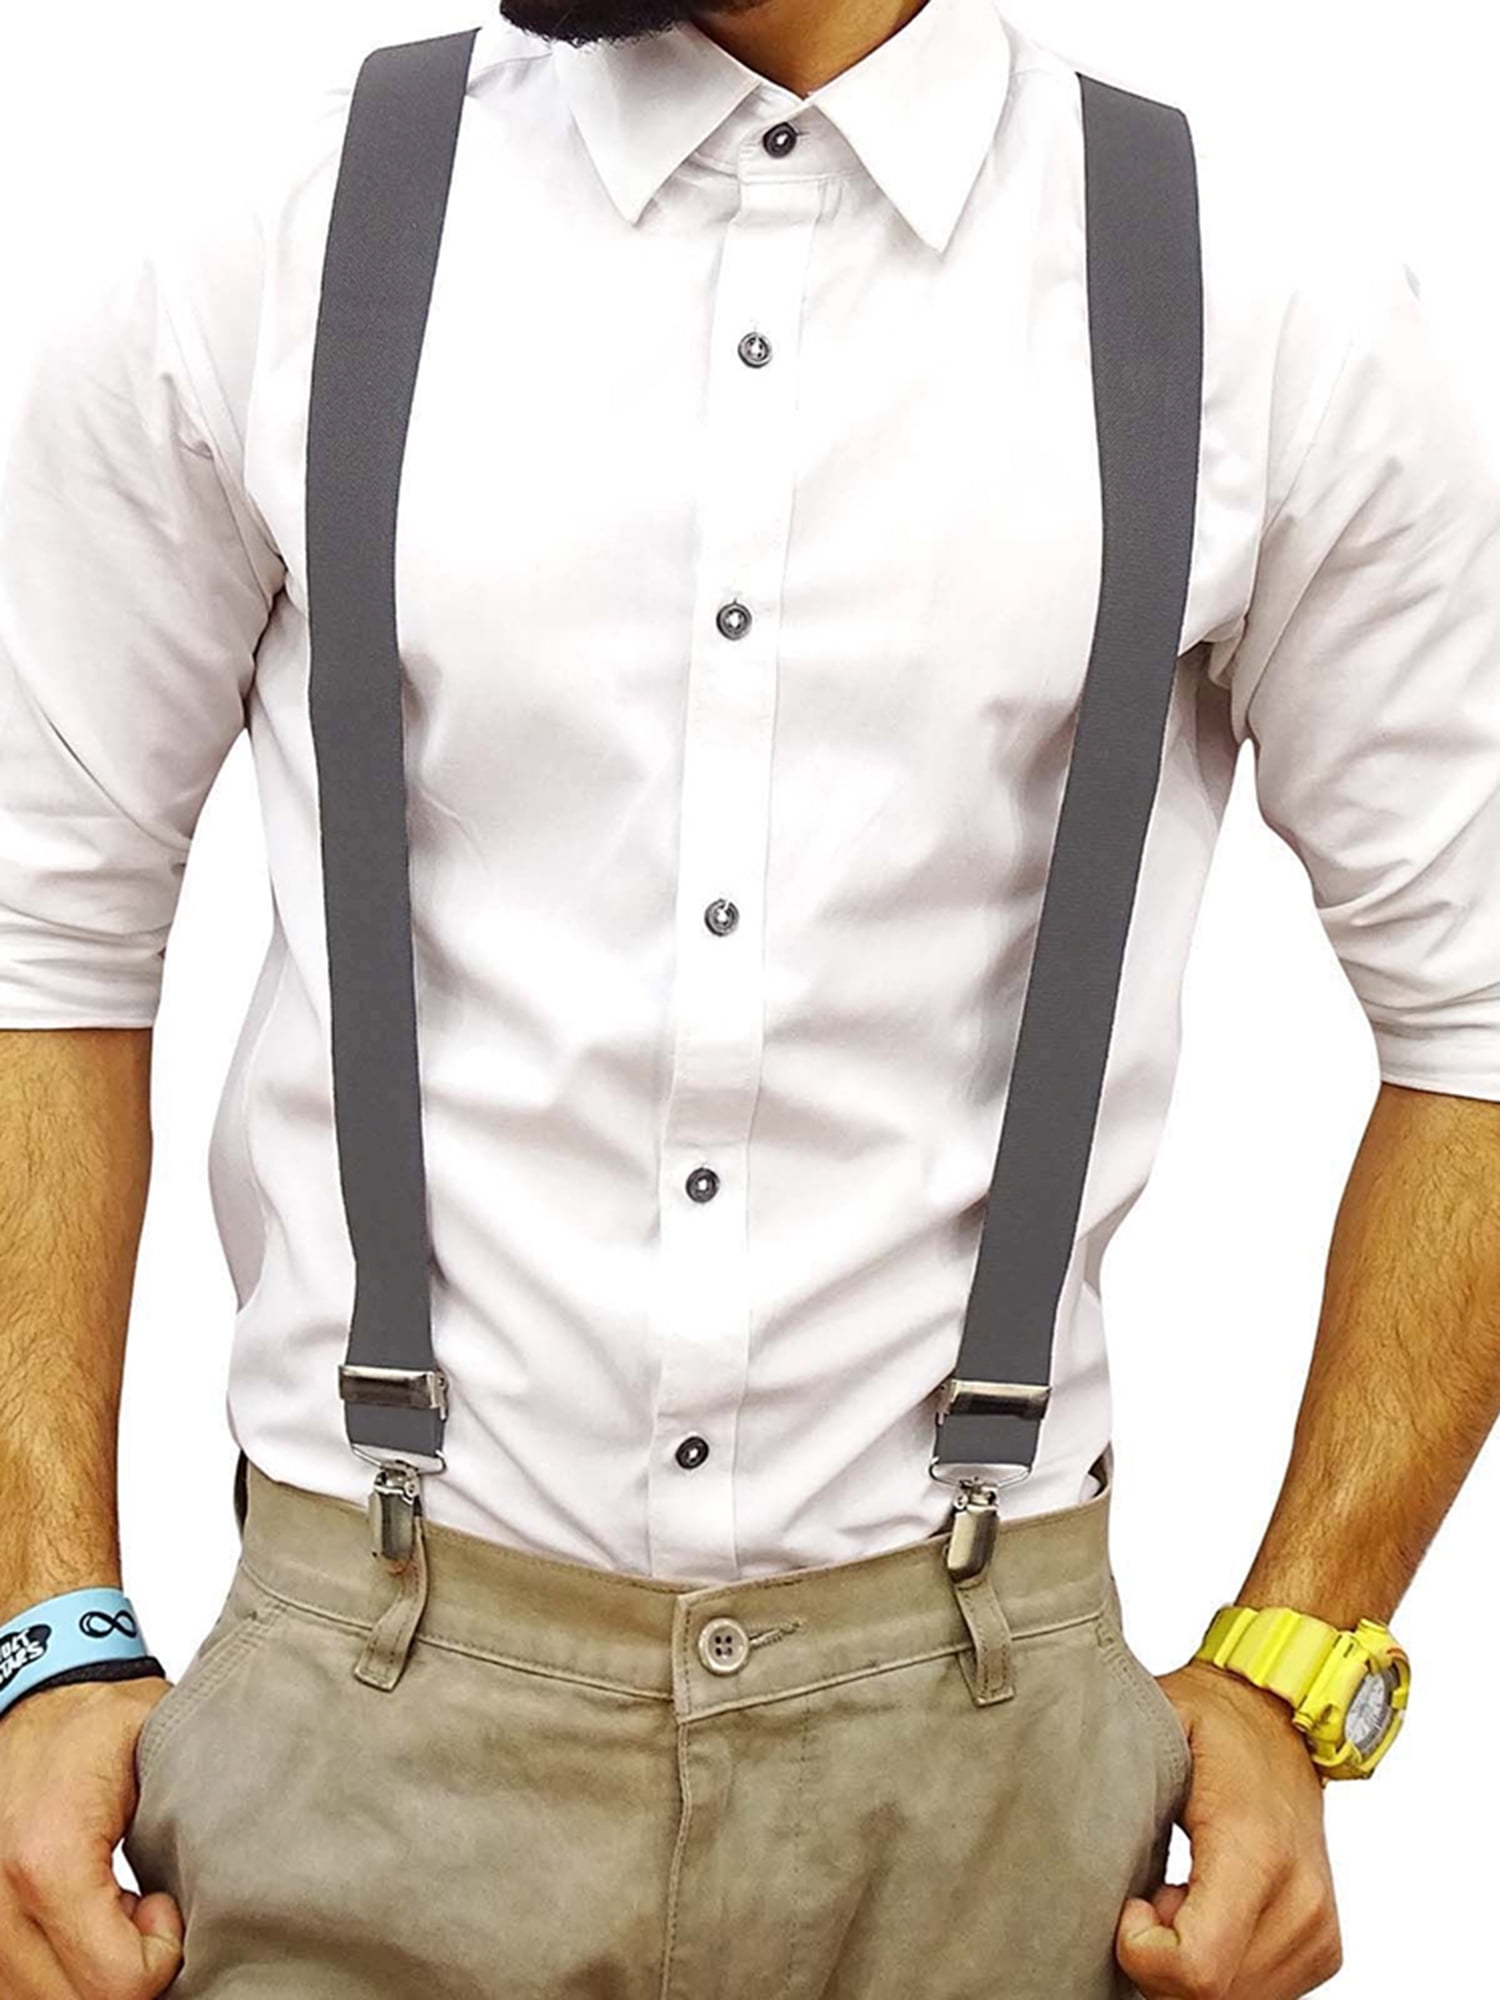 Men's Retro clip-on Y Back Suspenders Party Costume Adjustable Braces 